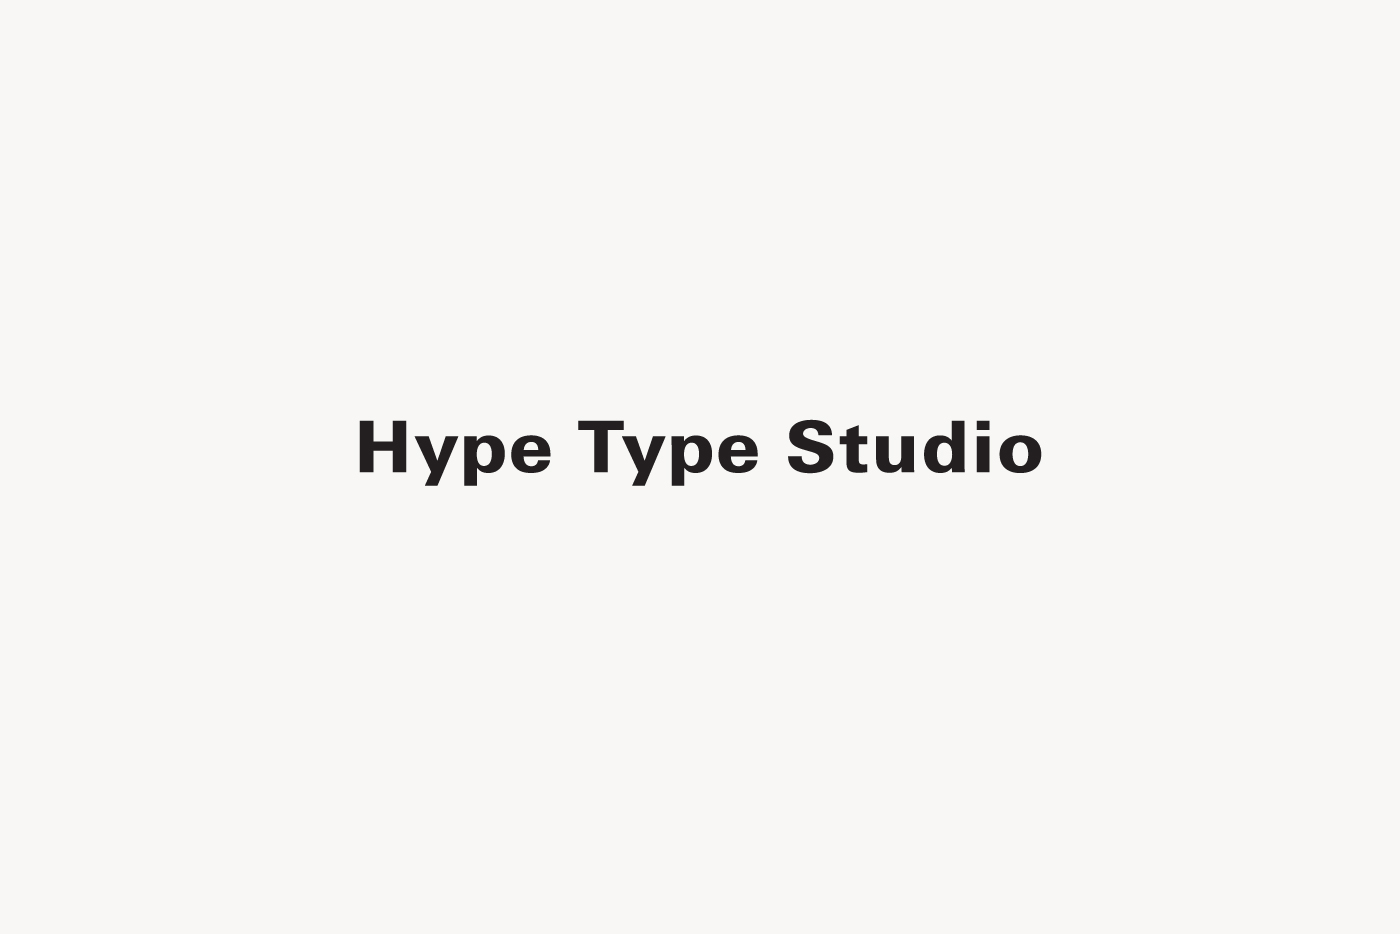 hypetype hype type studio hypetypestudio HTS hype type newwork studio newwork